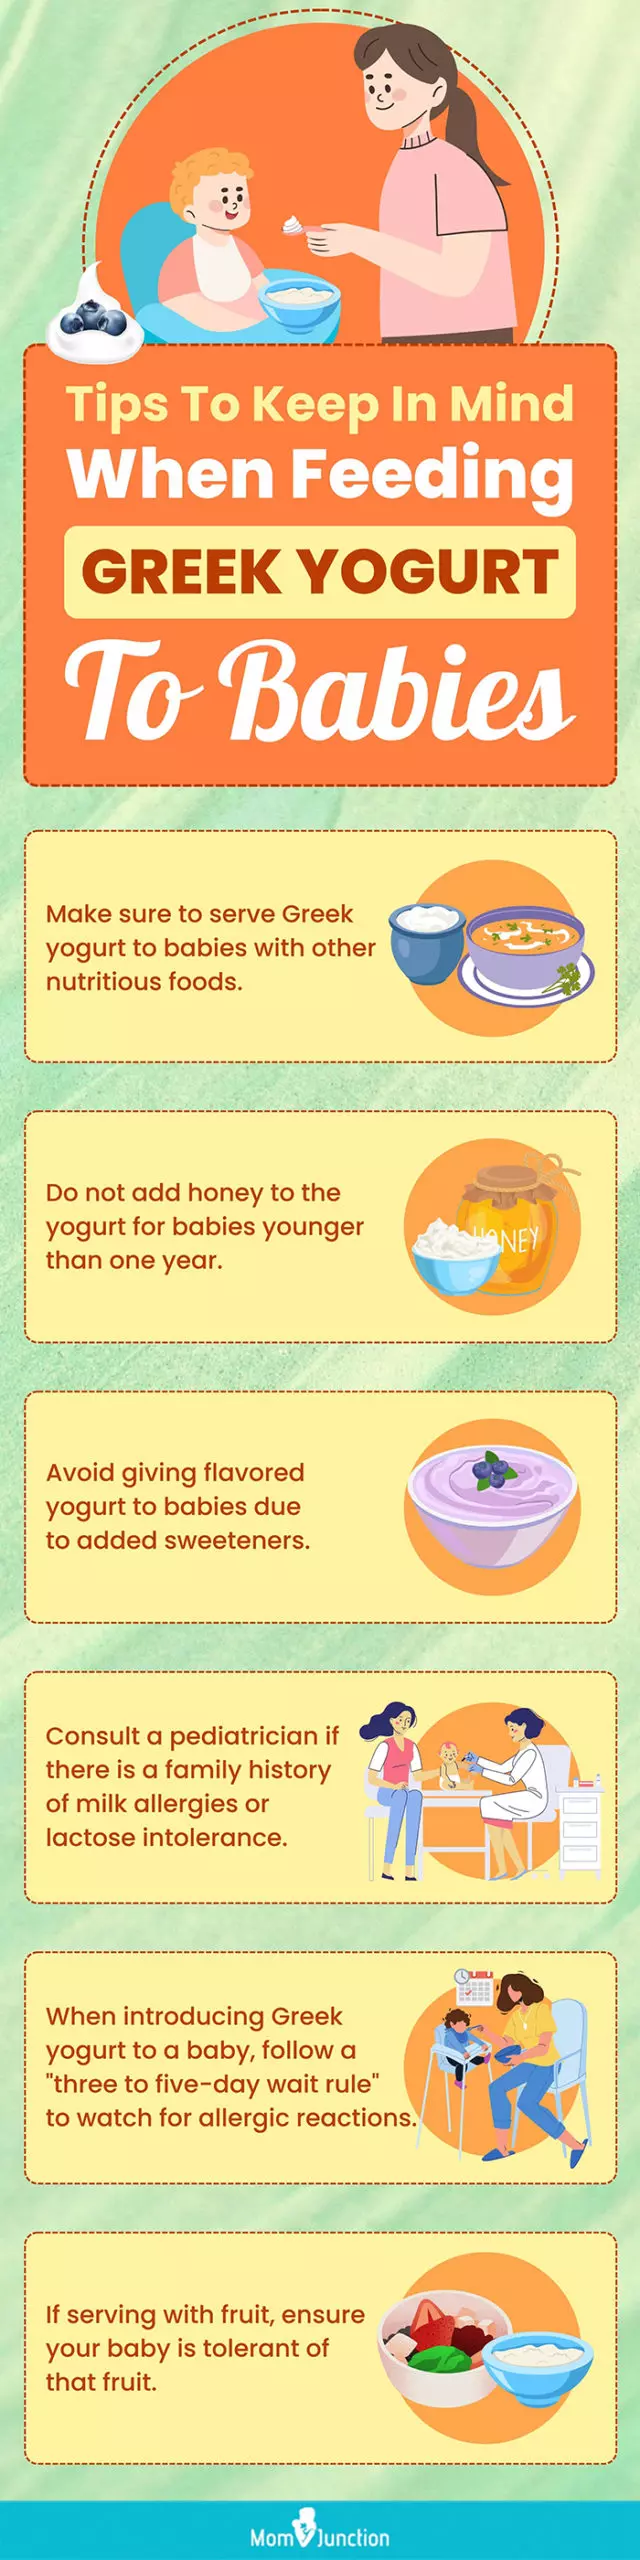 tips to keep in mind when feeding greek yogurt to babies (infographic)